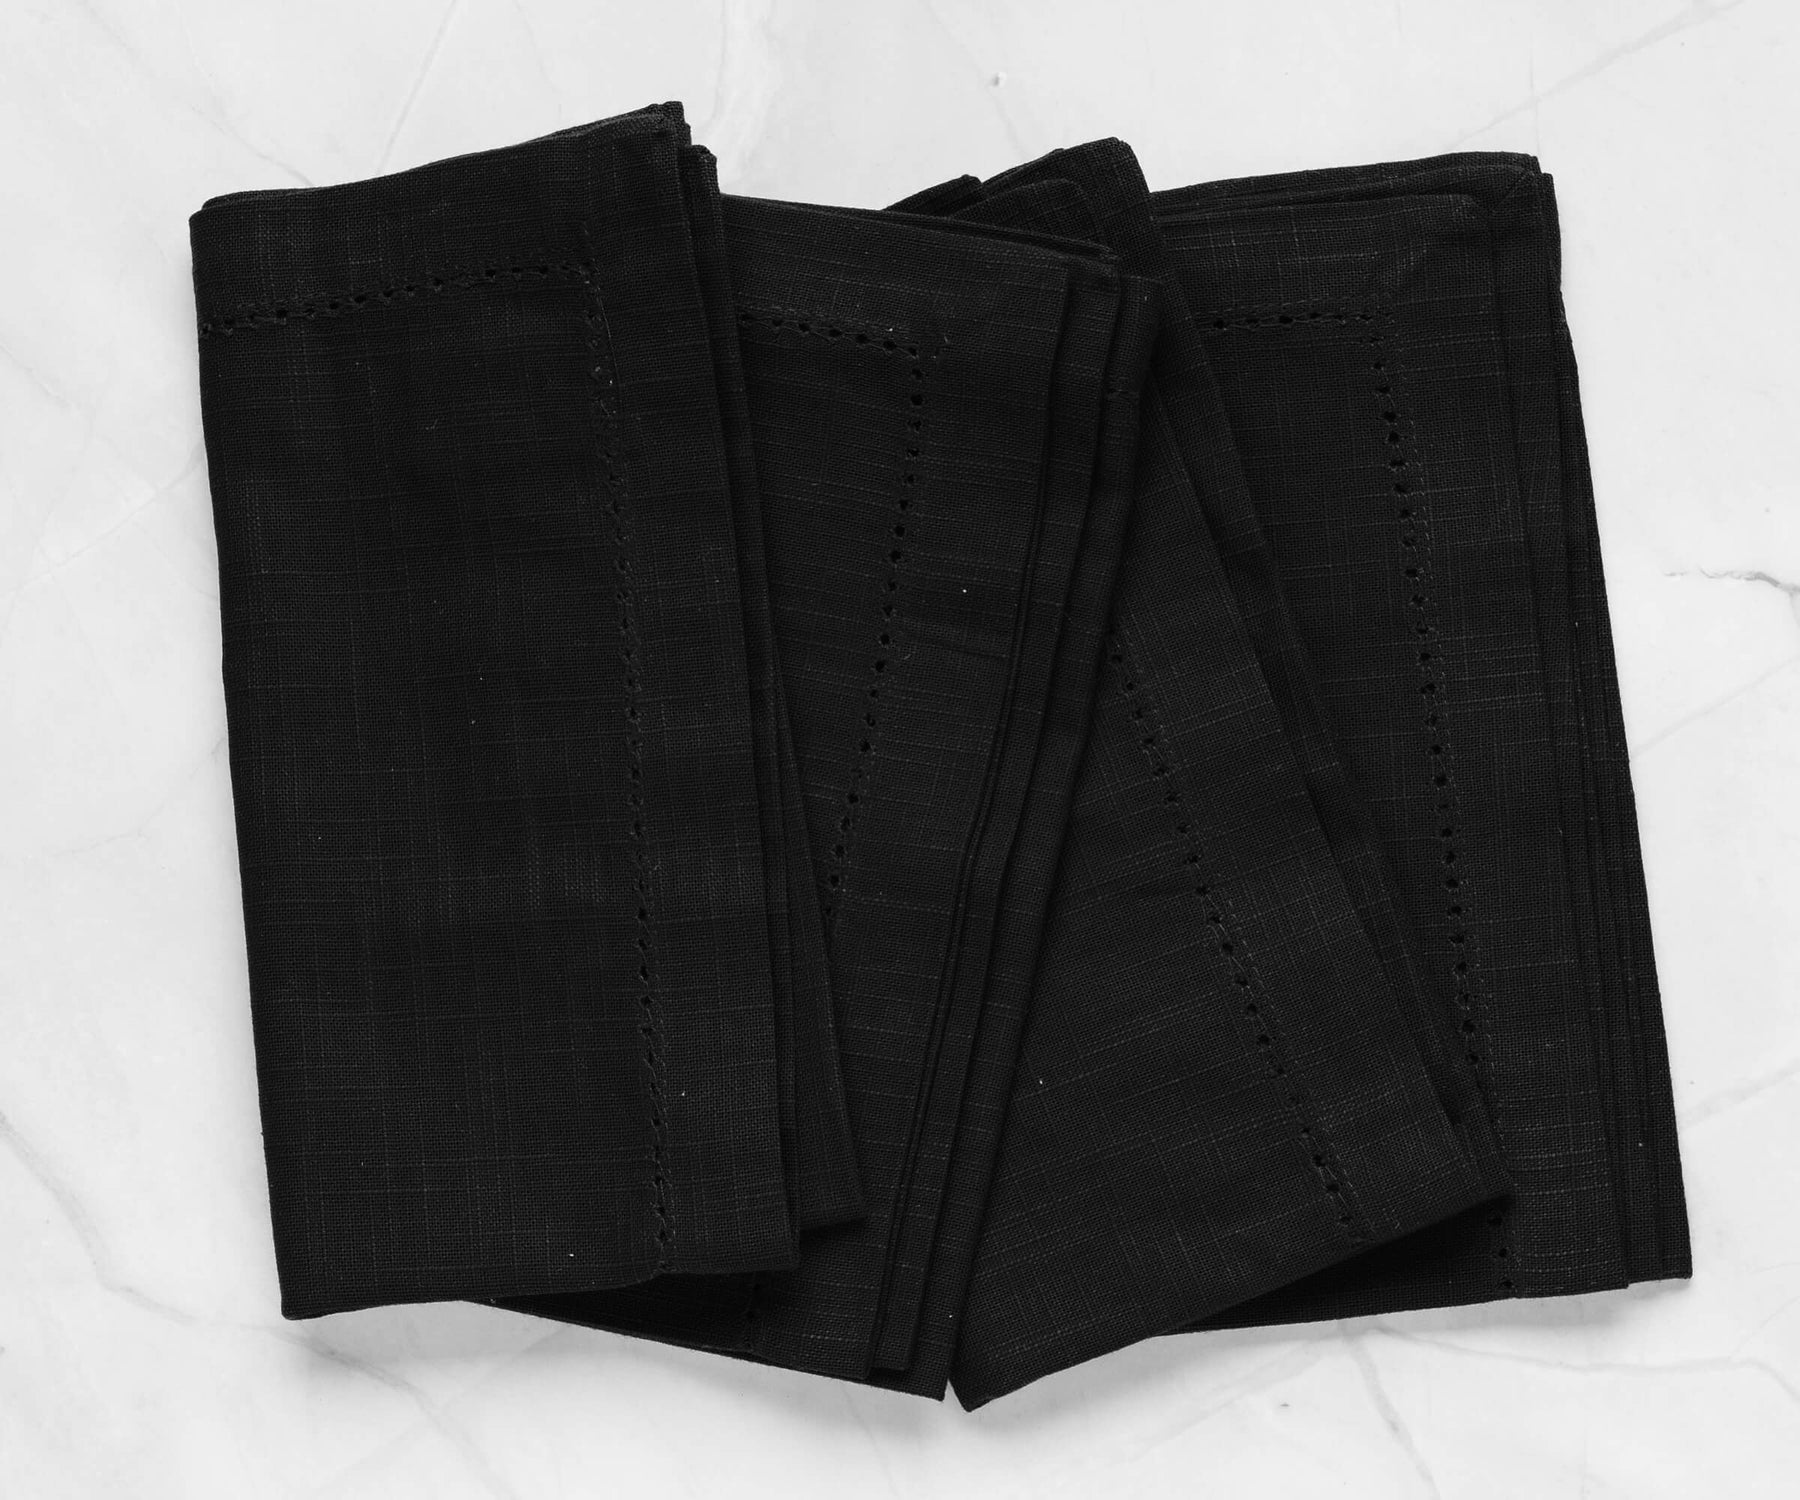 black linen napkins edge folded cloth napkins